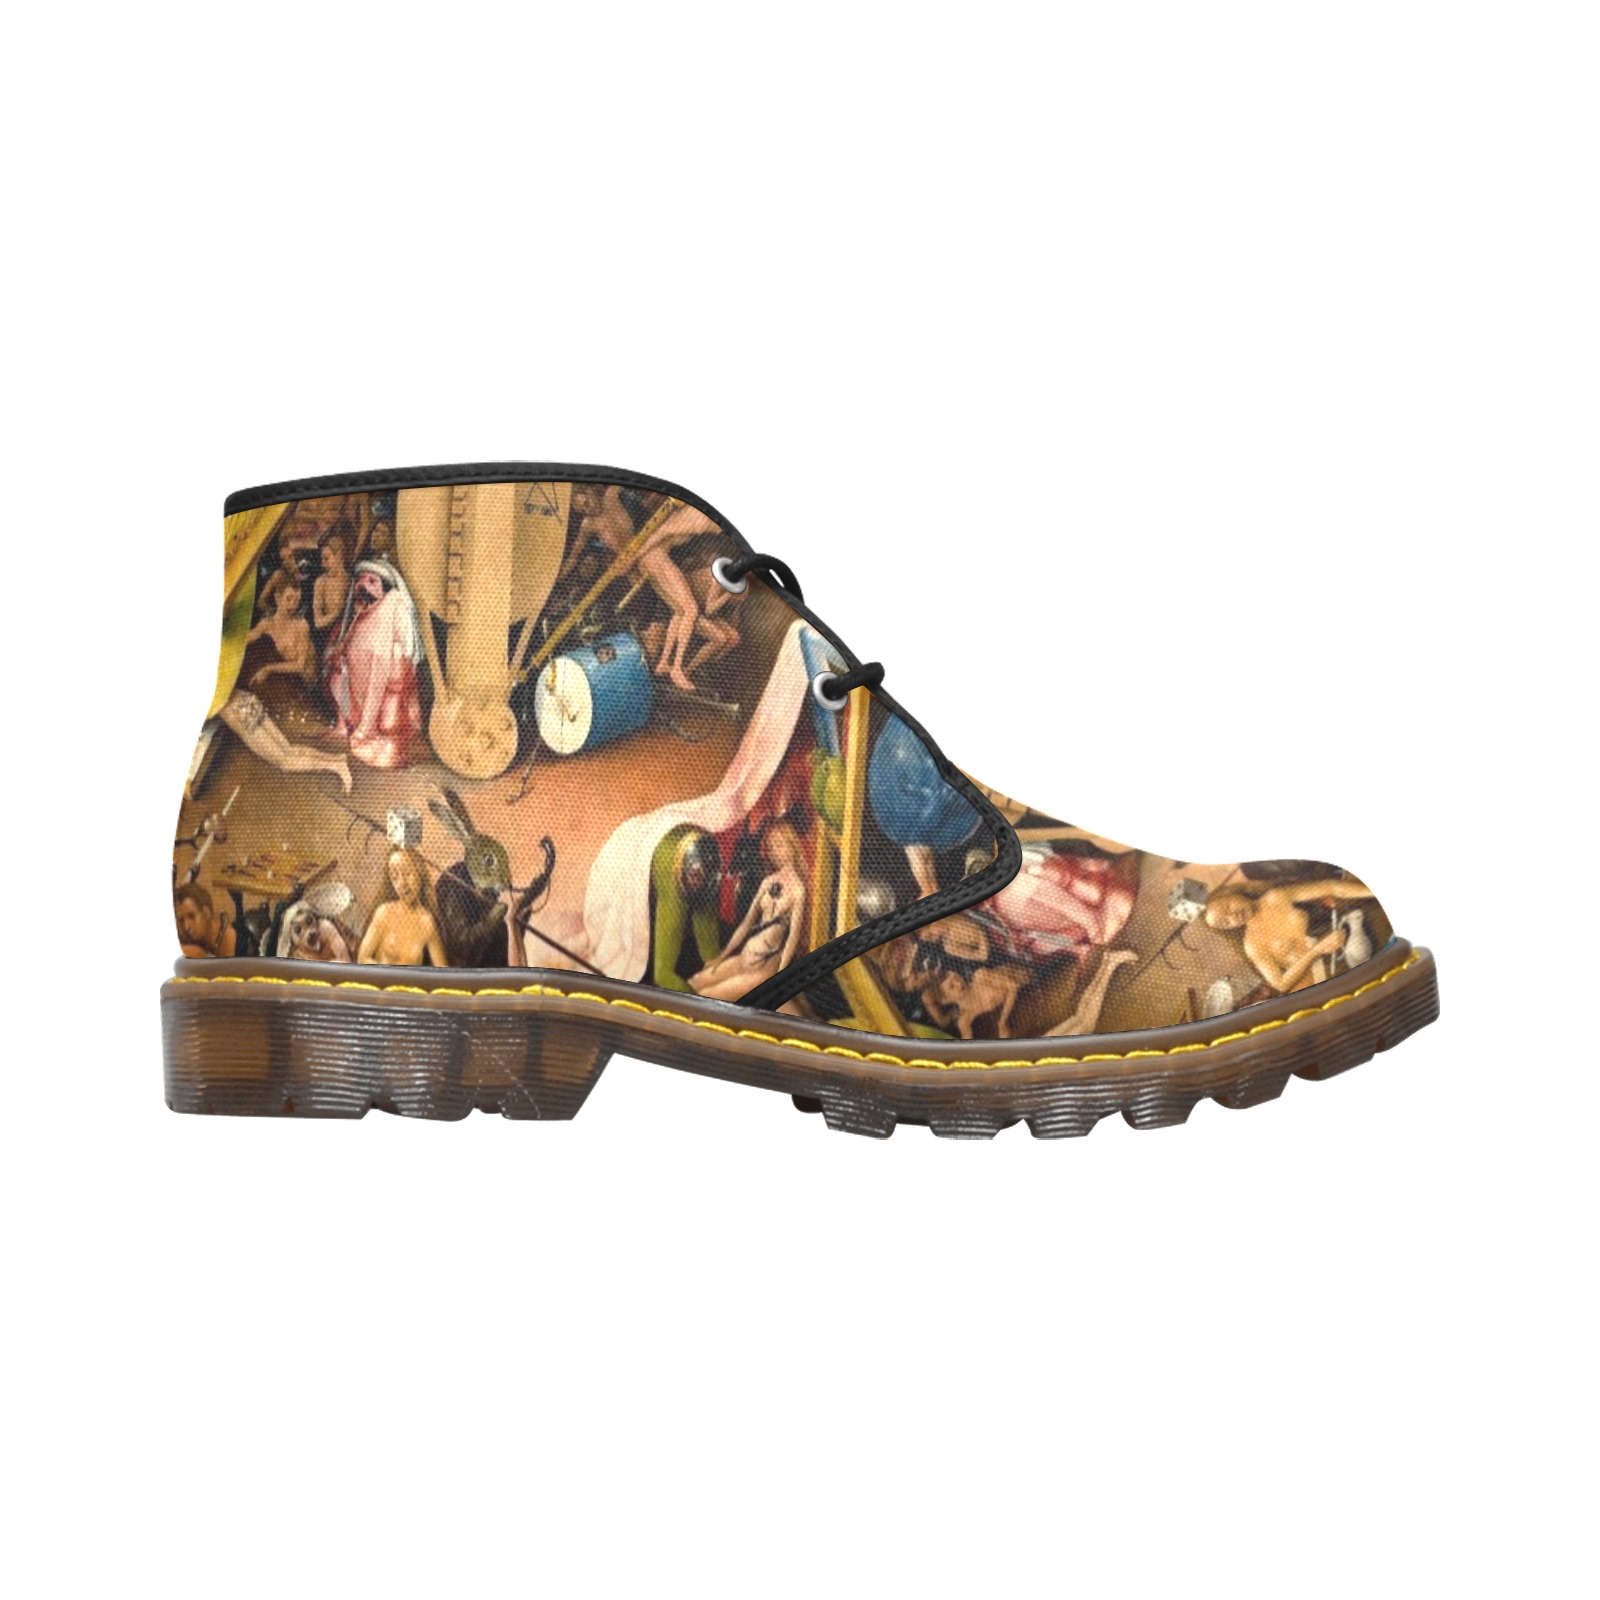 Garden of Earthly Delights 3 Men's Canvas Chukka Boots (Model 2402-1)